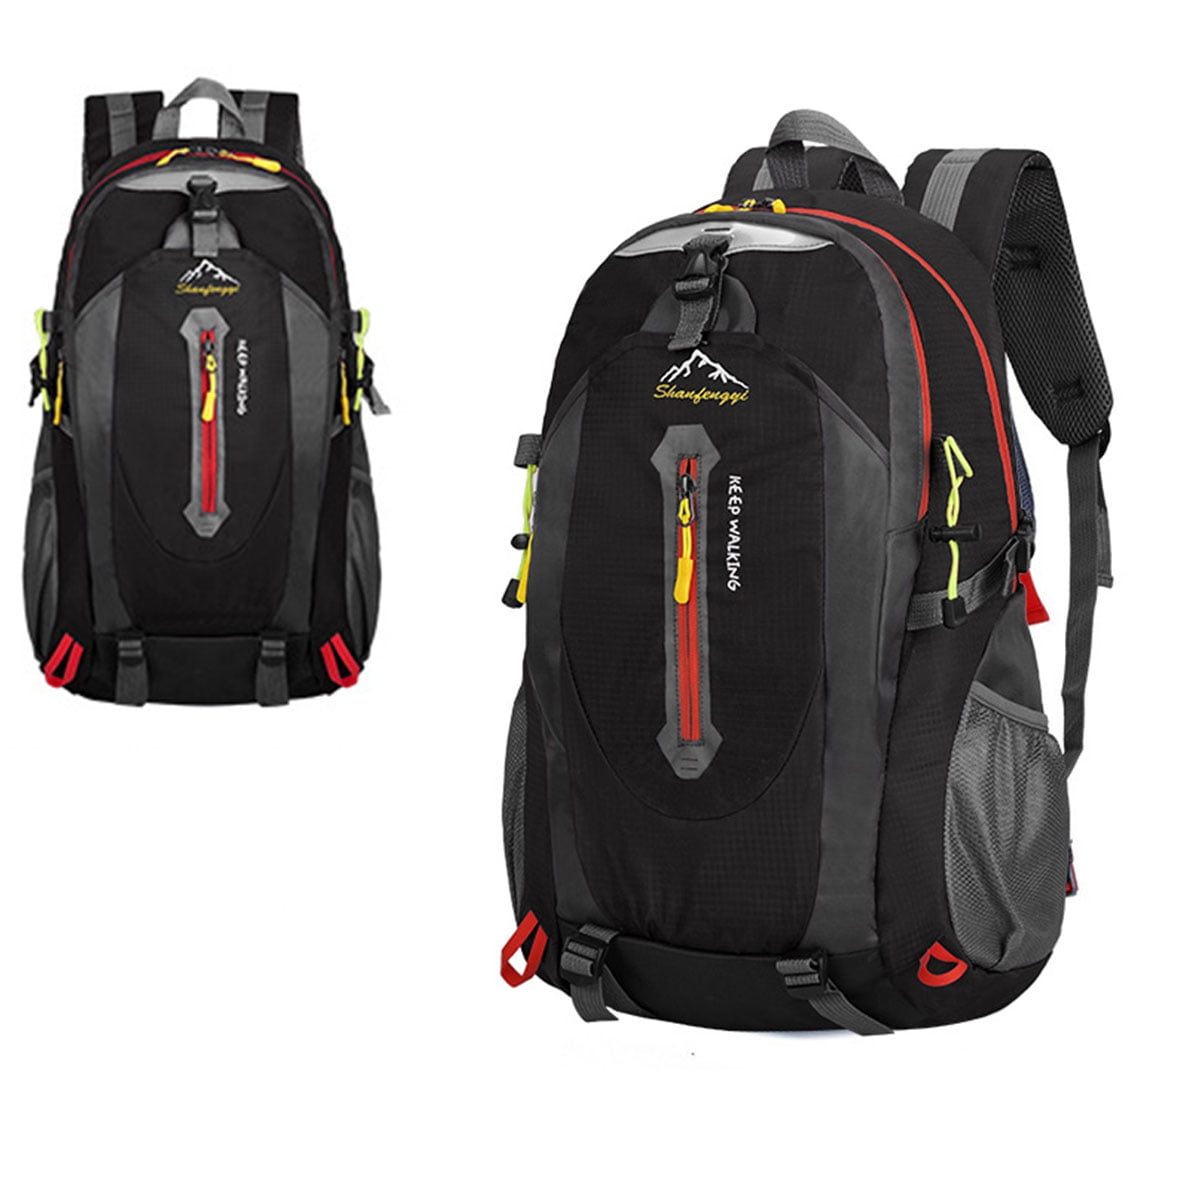 Men's backpack hiking camping waterproof backpack walking bag bag travel bag New 